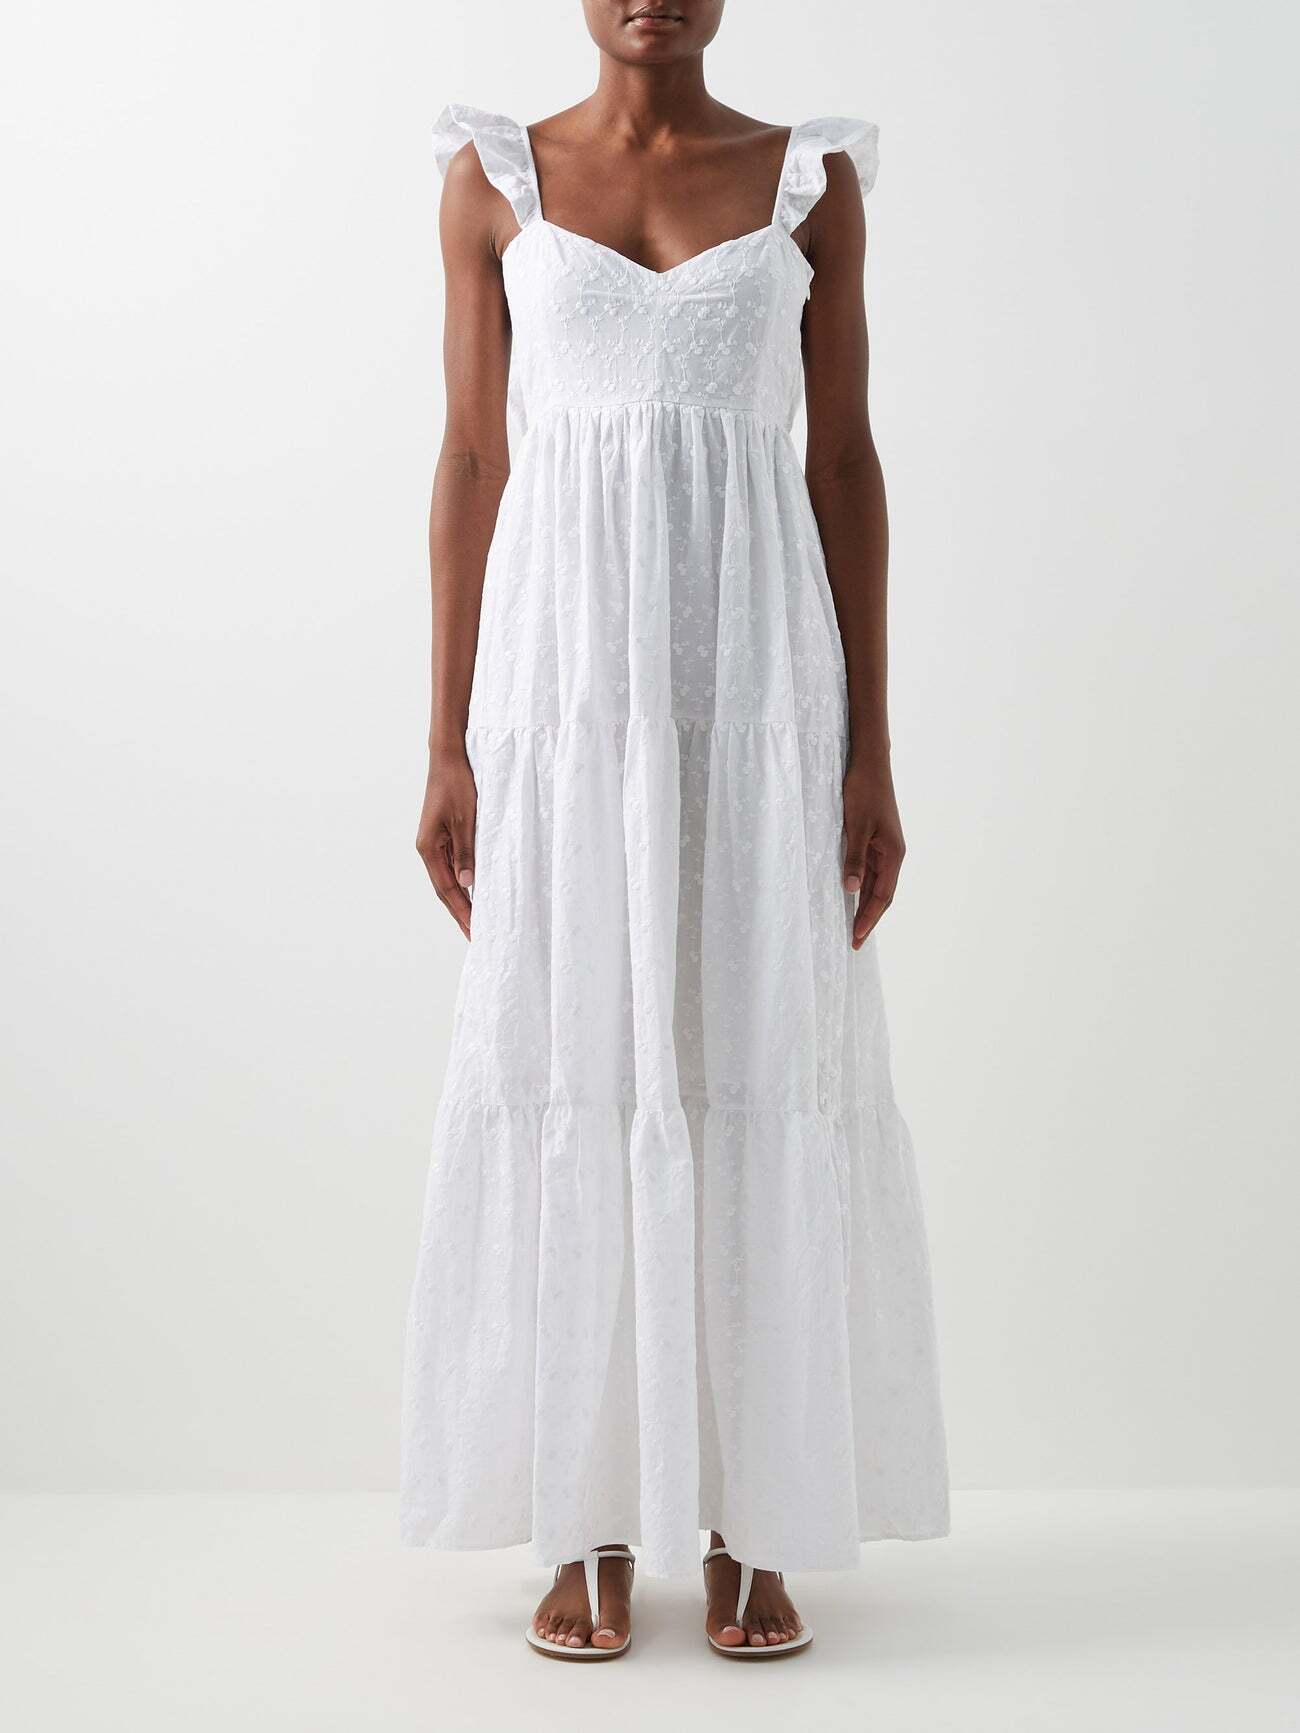 Wiggy Kit - Scarletta Ruffled Embroidered Cotton Dress - Womens - White